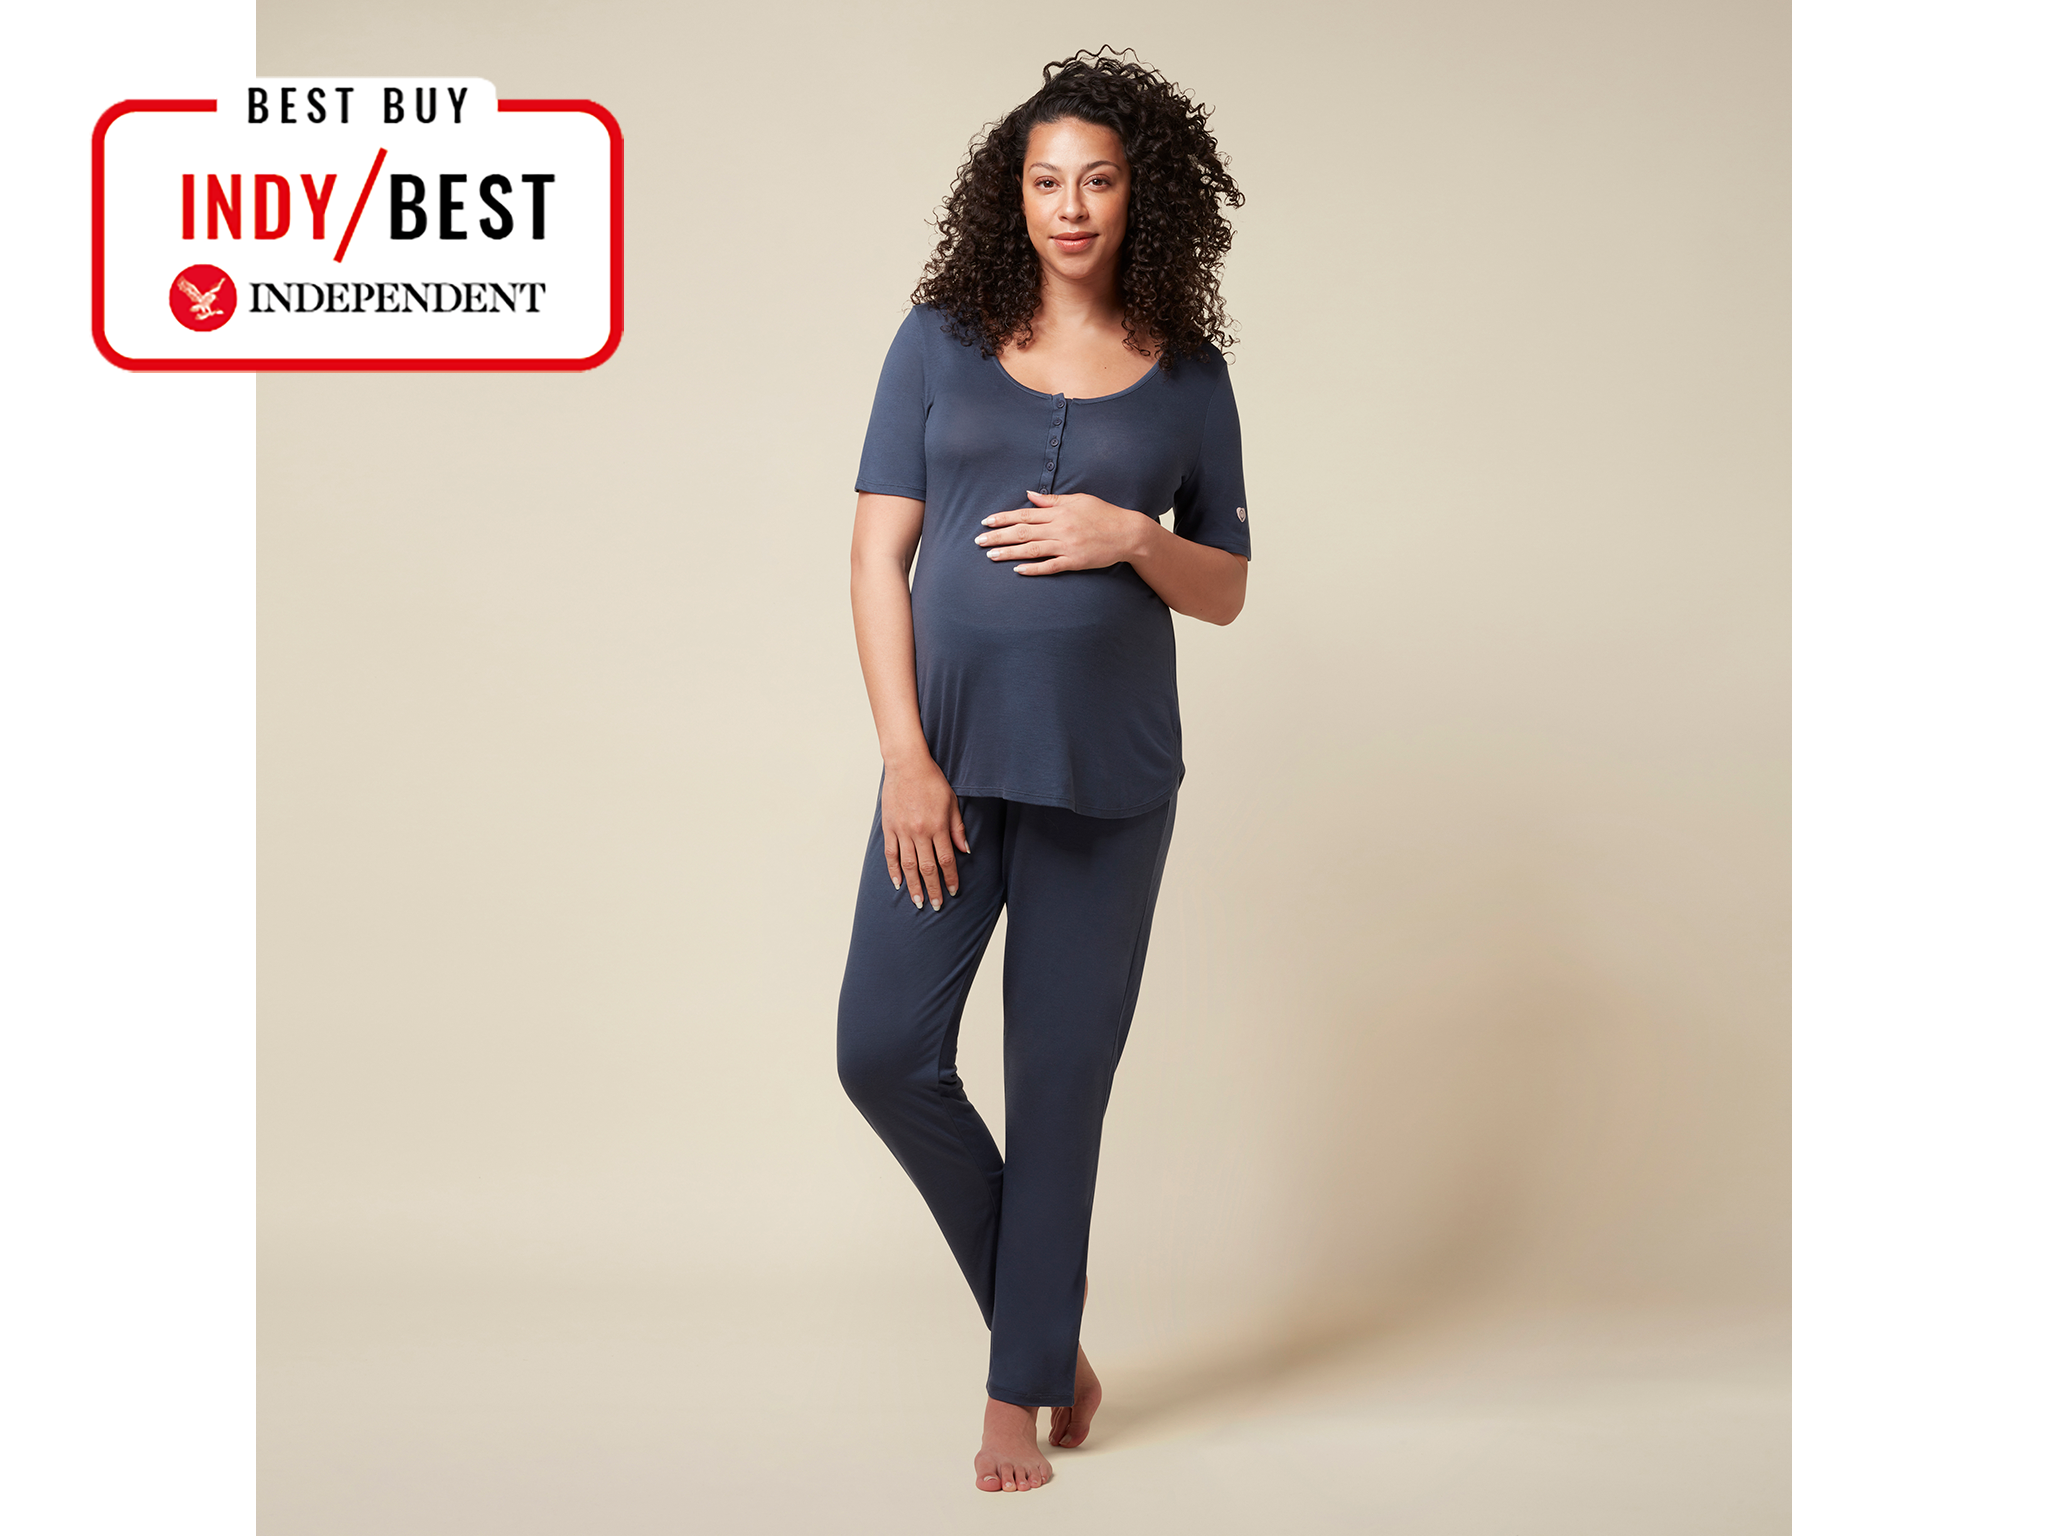 Berrywho Maternity Pajamas Pregnant Adjustable Belt Trousers Short Sleeve Breastfeeding Sleepwear Nursing Nightwear 2pcs Claret M 